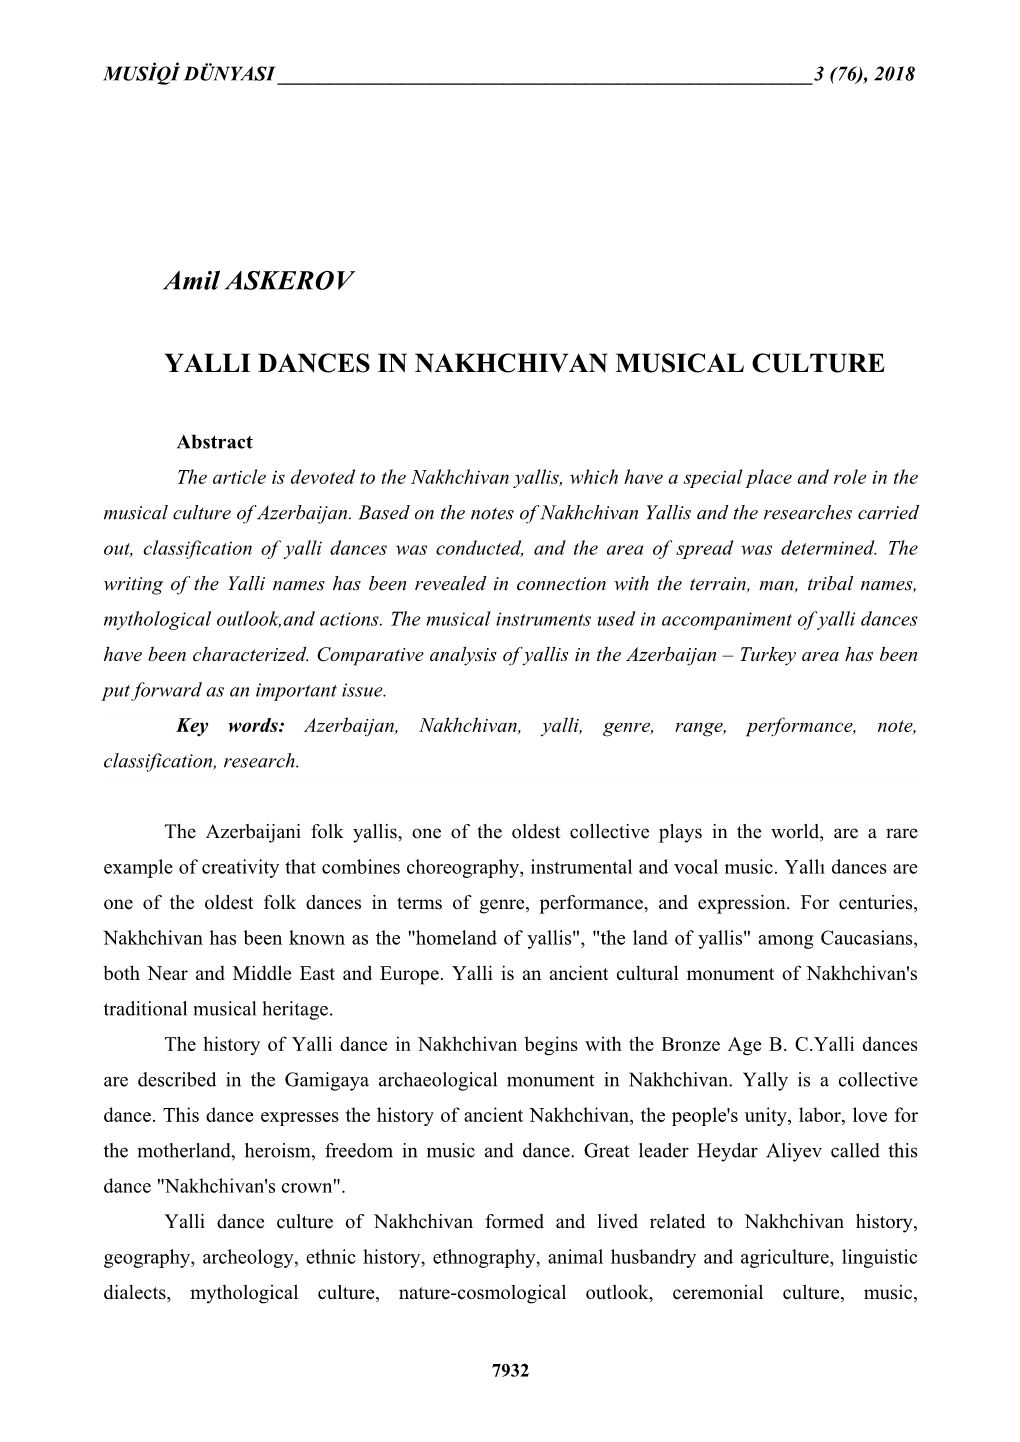 Amil ASKEROV YALLI DANCES in NAKHCHIVAN MUSICAL CULTURE